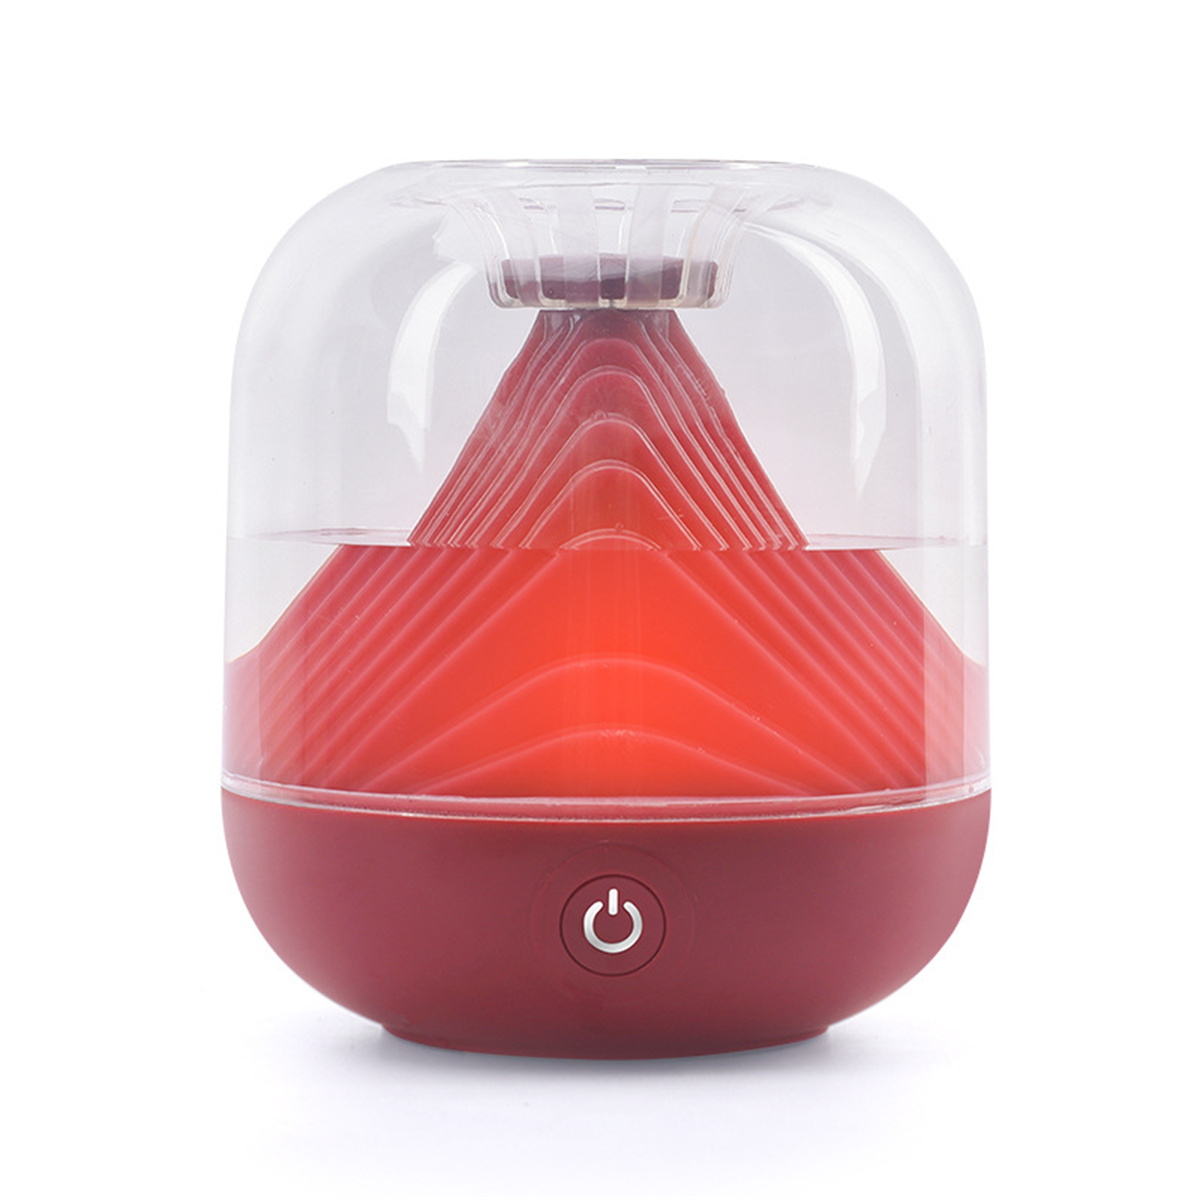 USB SYNTEK Aufladen Heavy m²) Wireless Rot 20 Luftbefeuchter Luftbefeuchter Luftreiniger Luftbefeuchter Mini Grün (Raumgröße: Mist